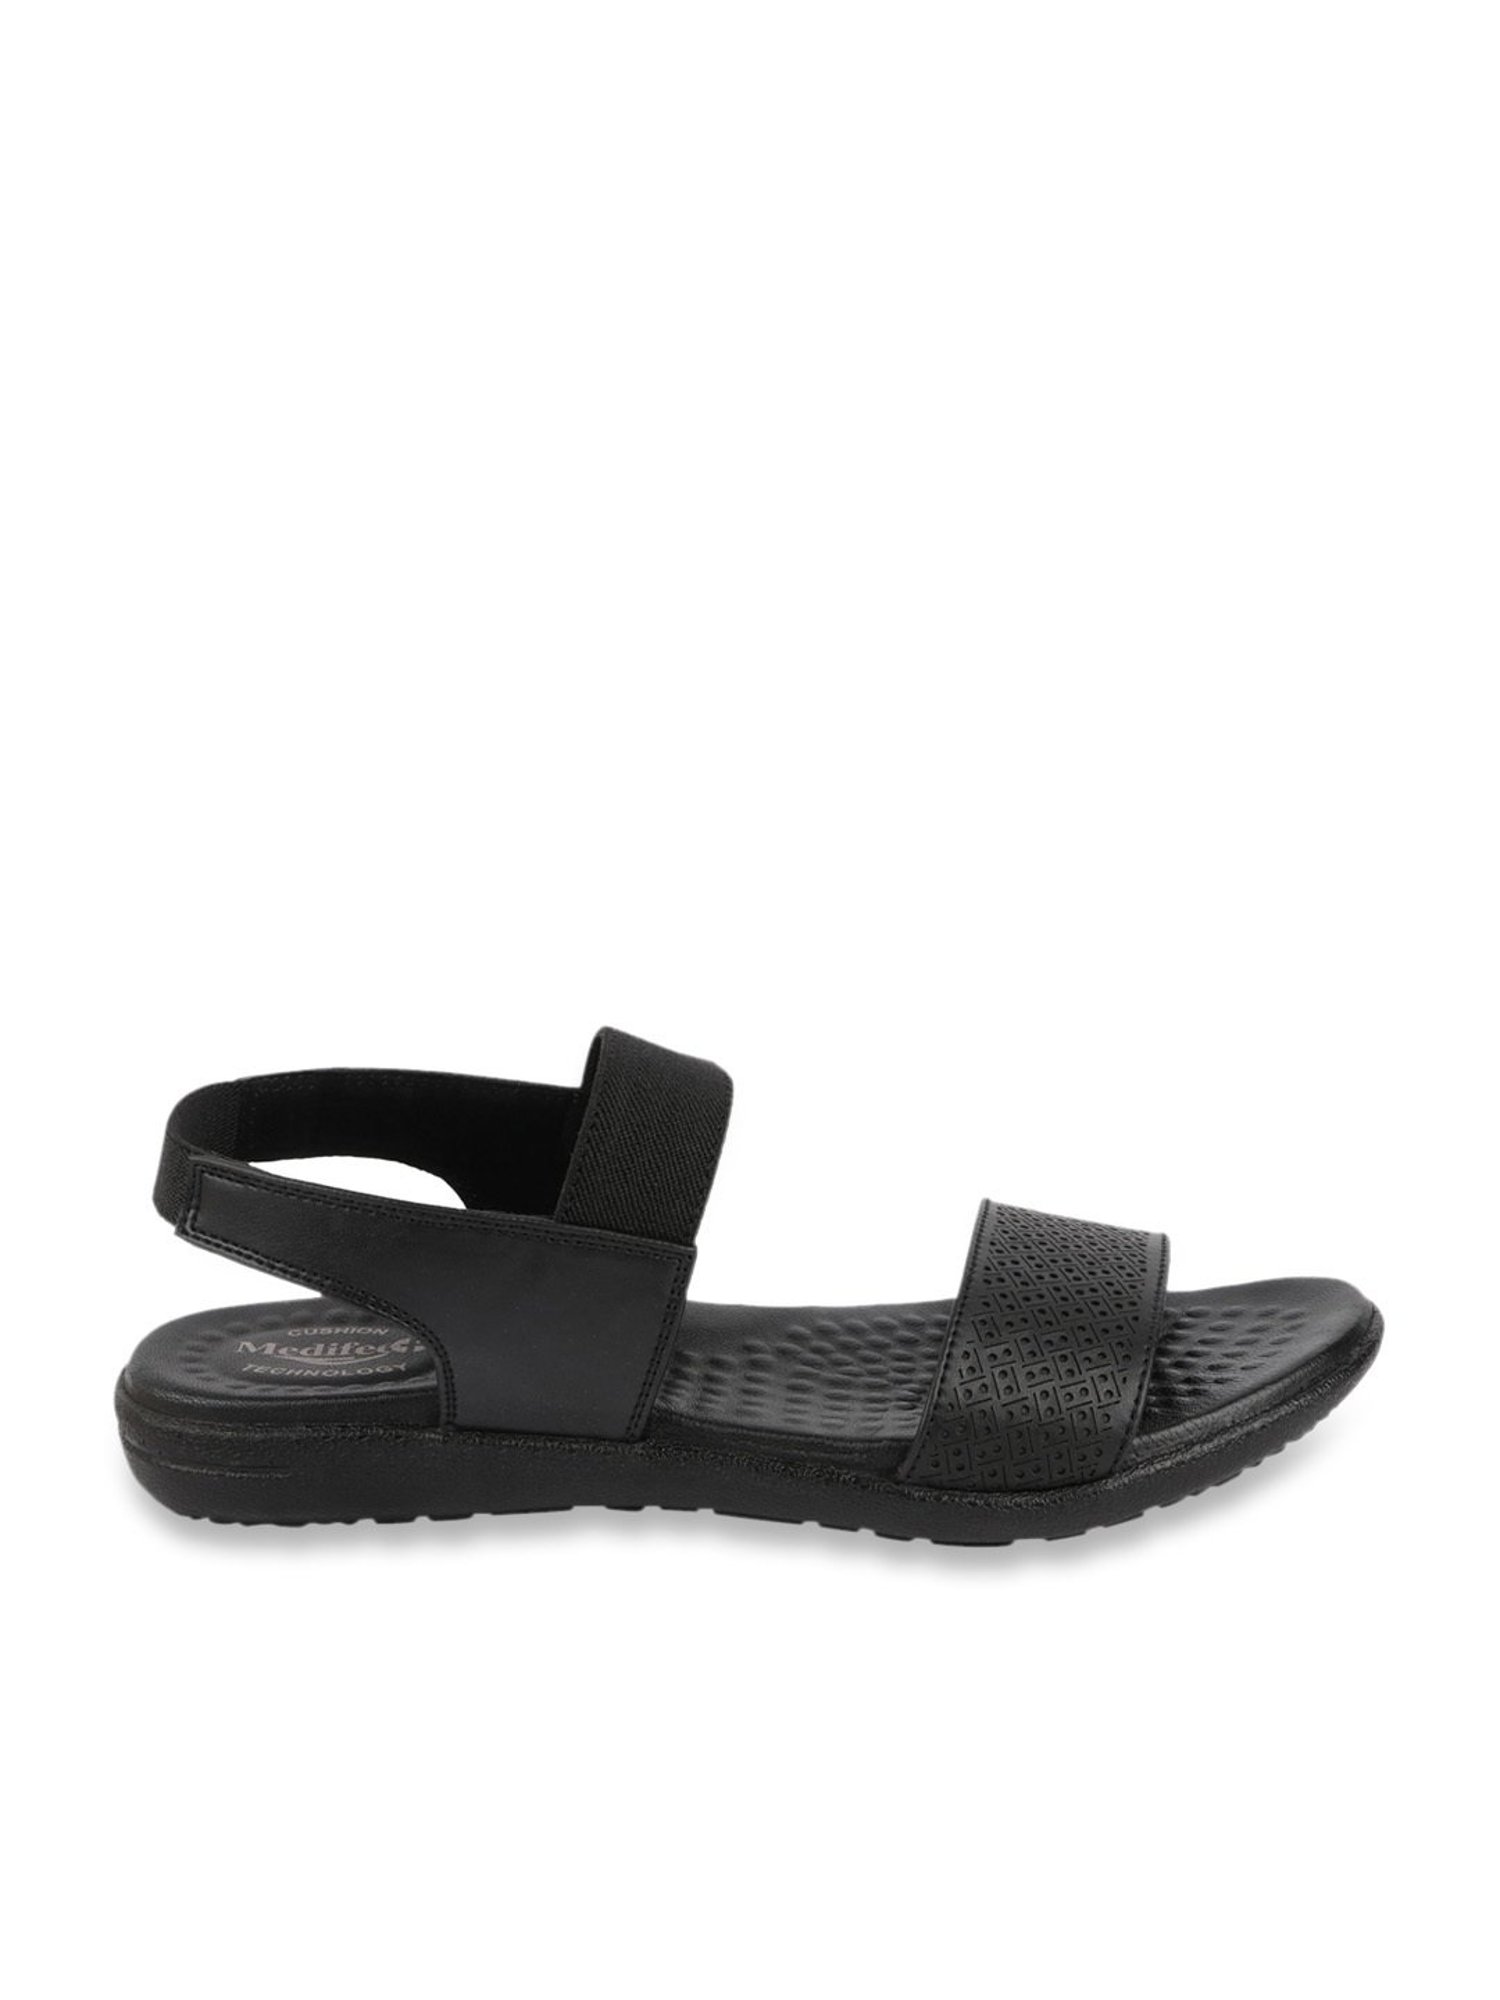 Brooklyn Ankle Strap Wedge - Sandal - Crocs